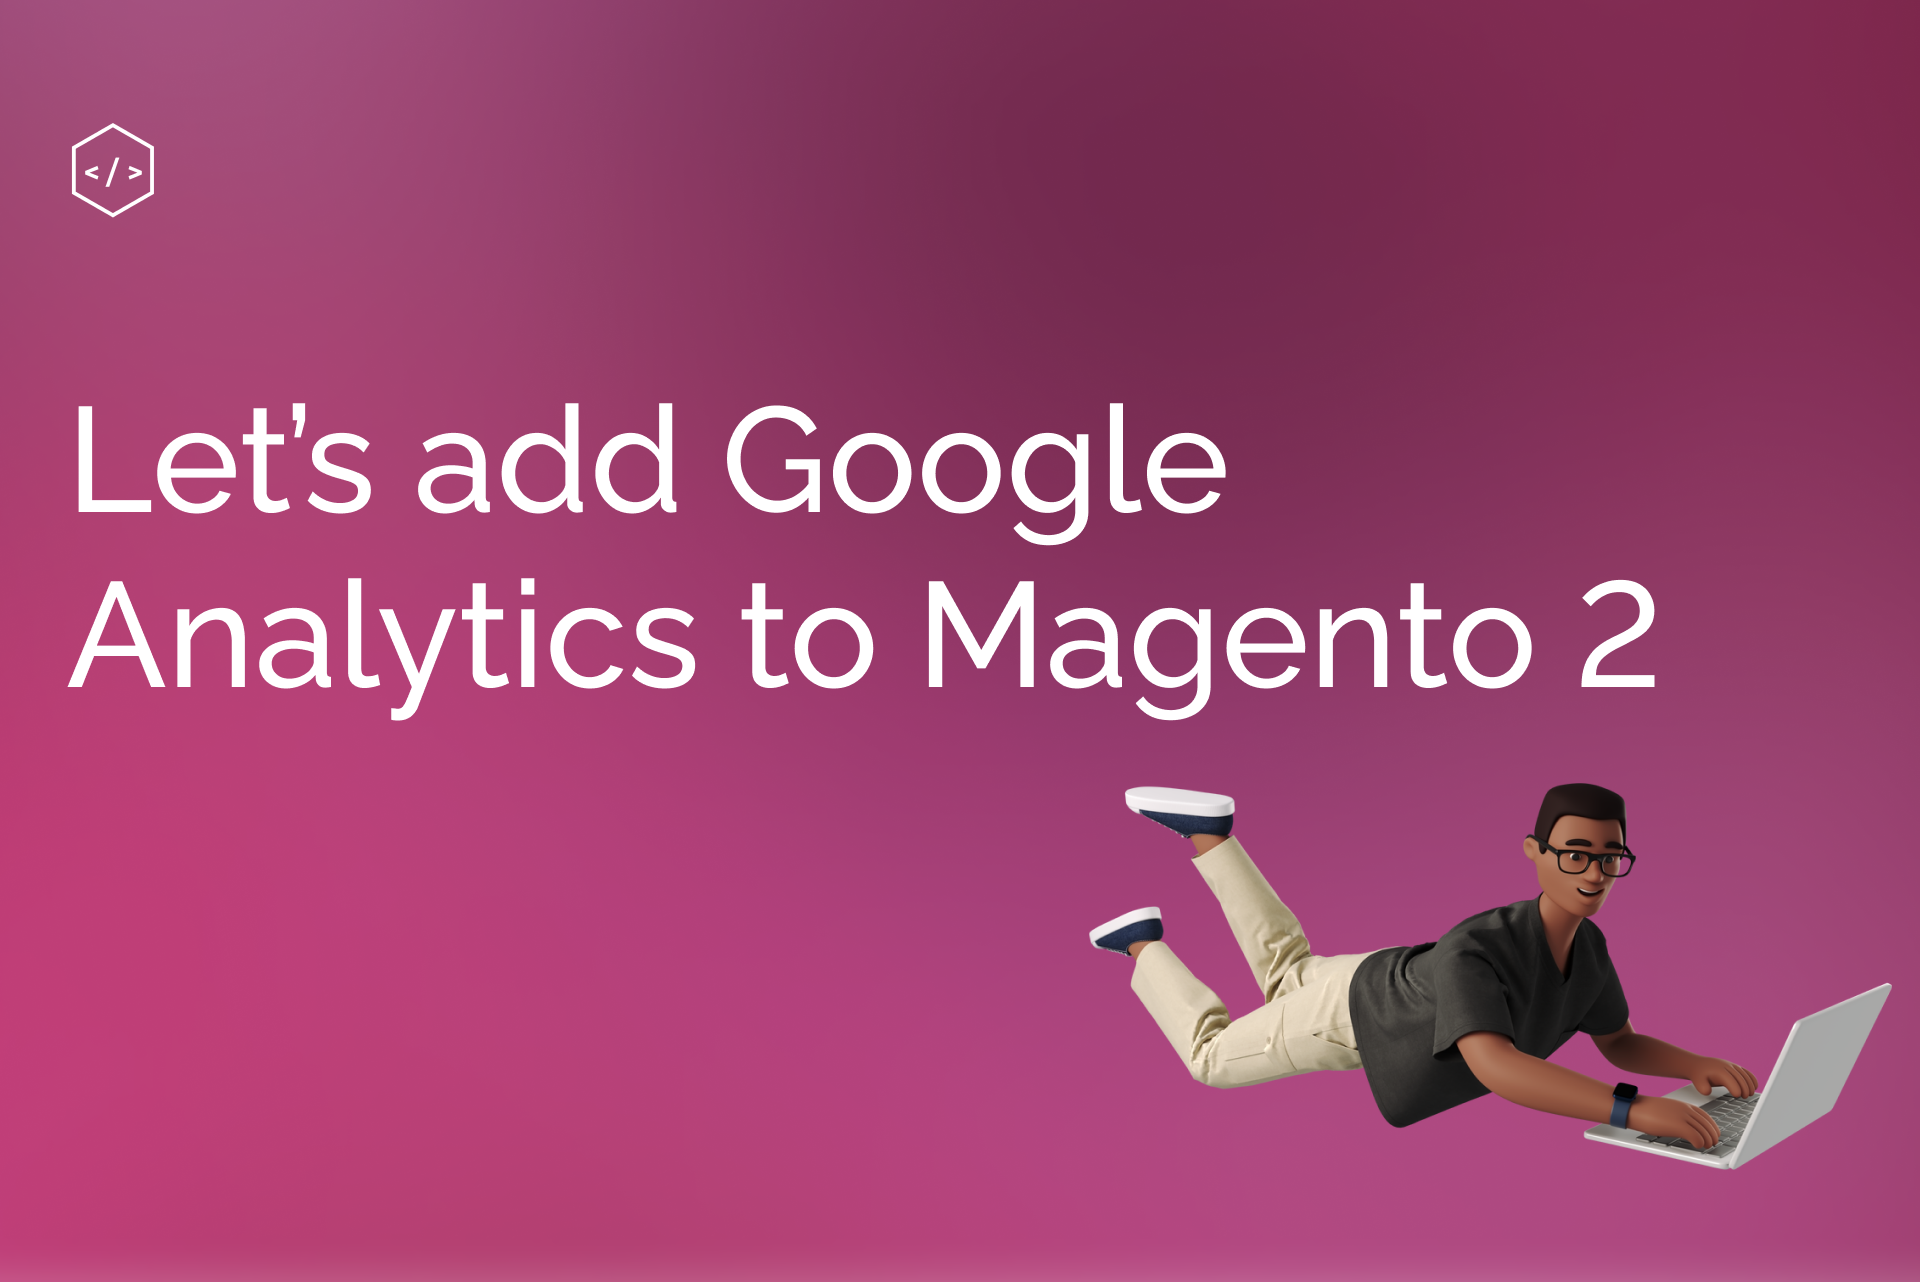 How to add Google Analytics to Magento 2